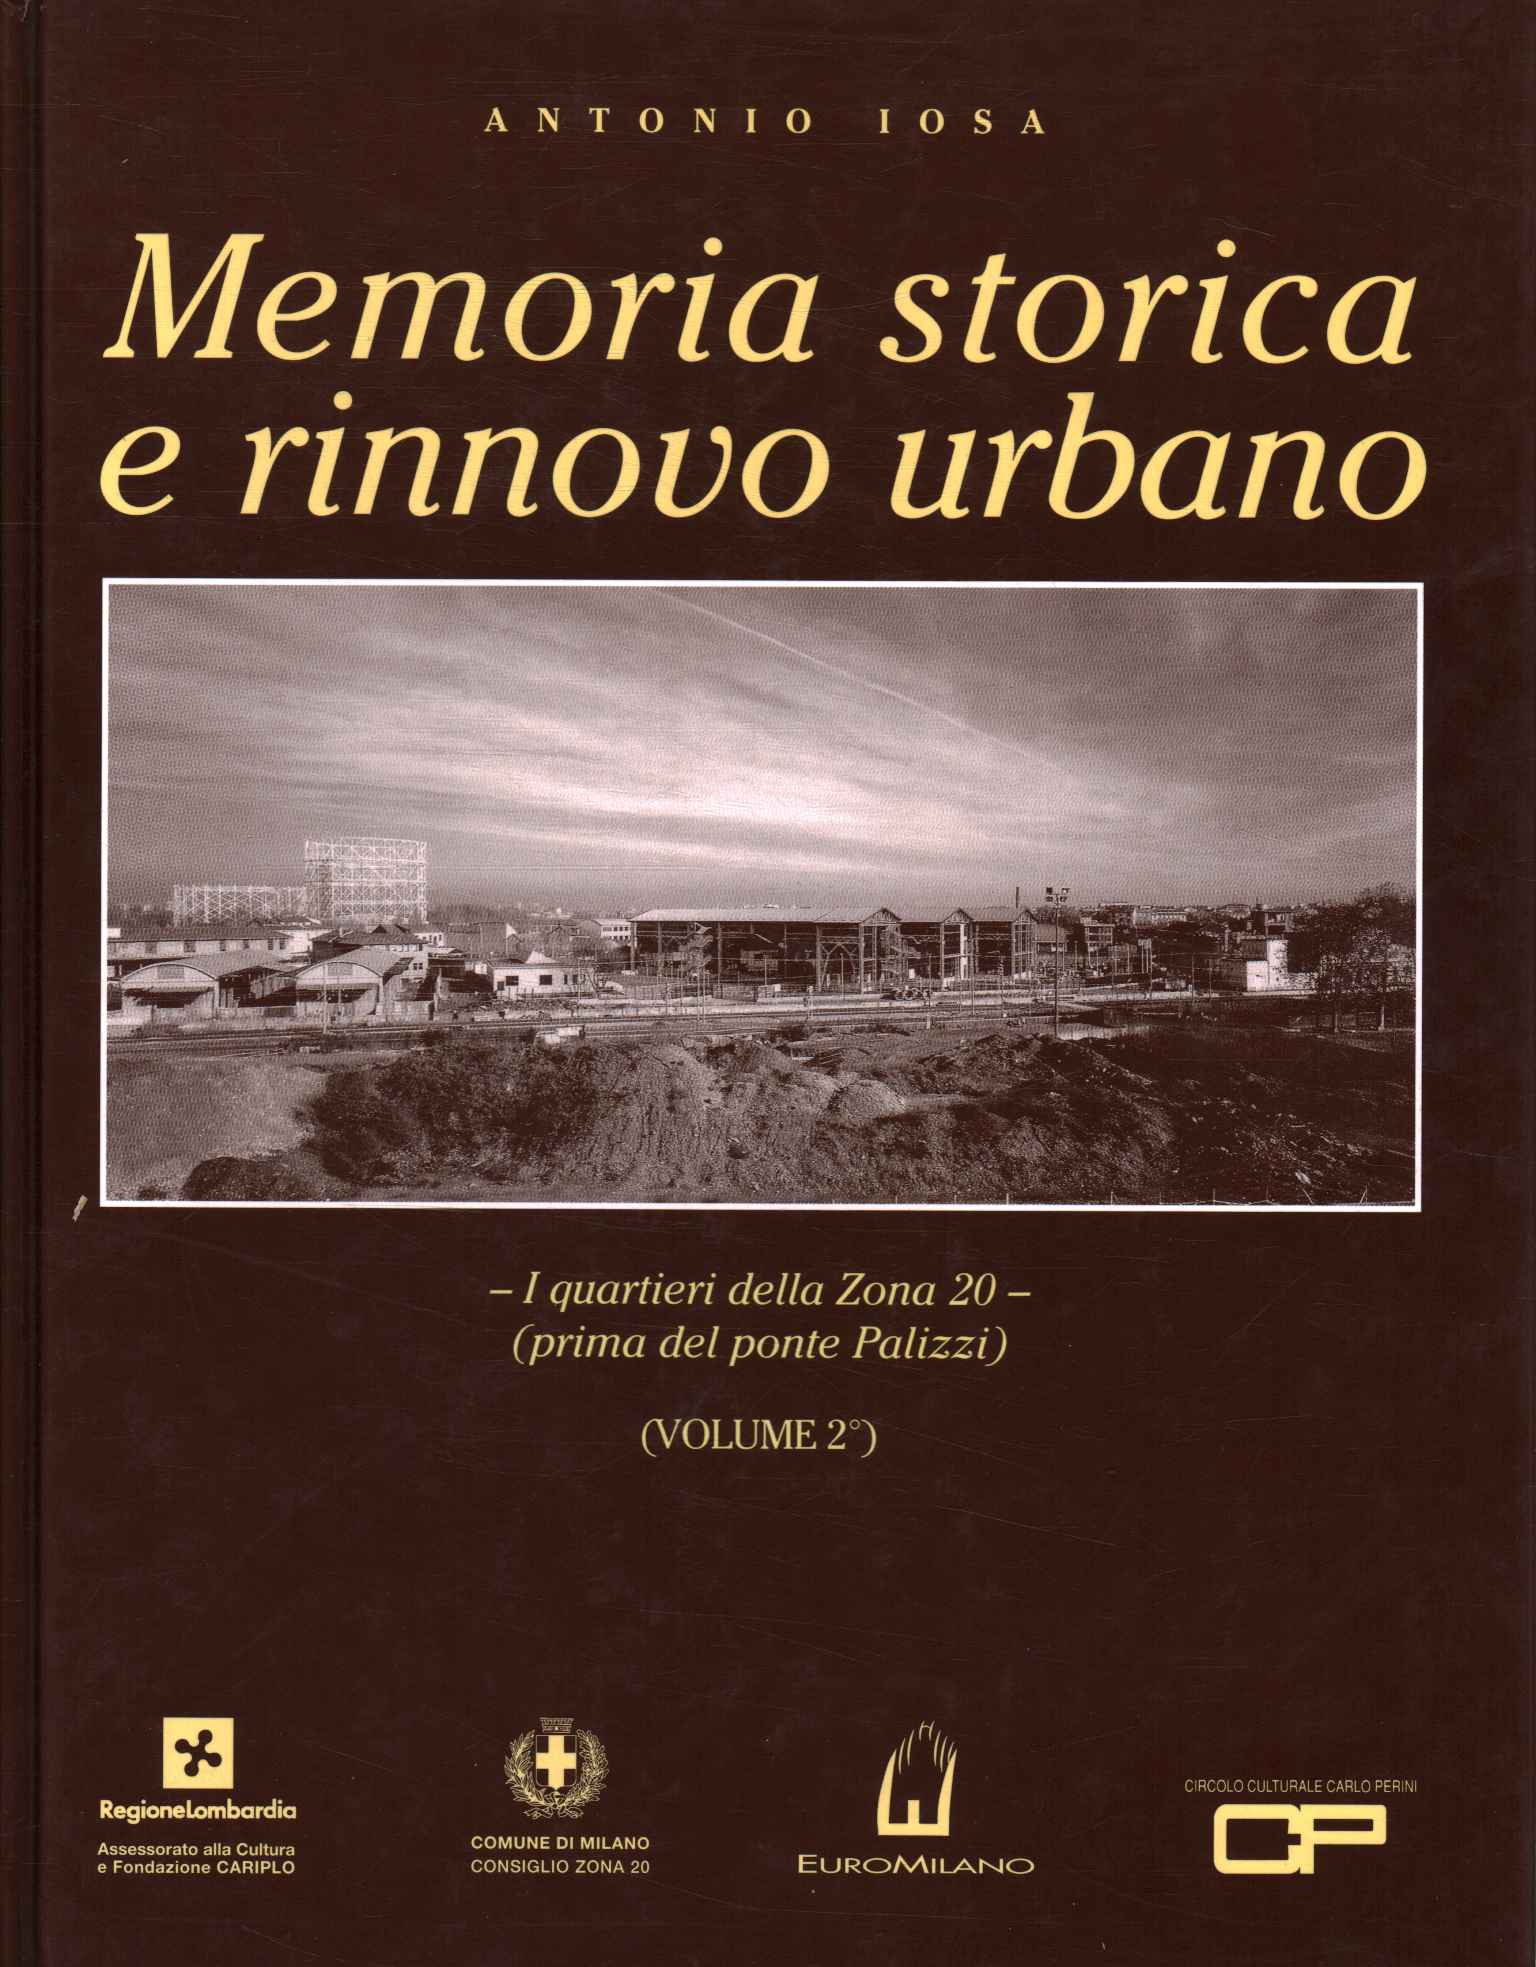 Historical memory and urban renewal (Volume